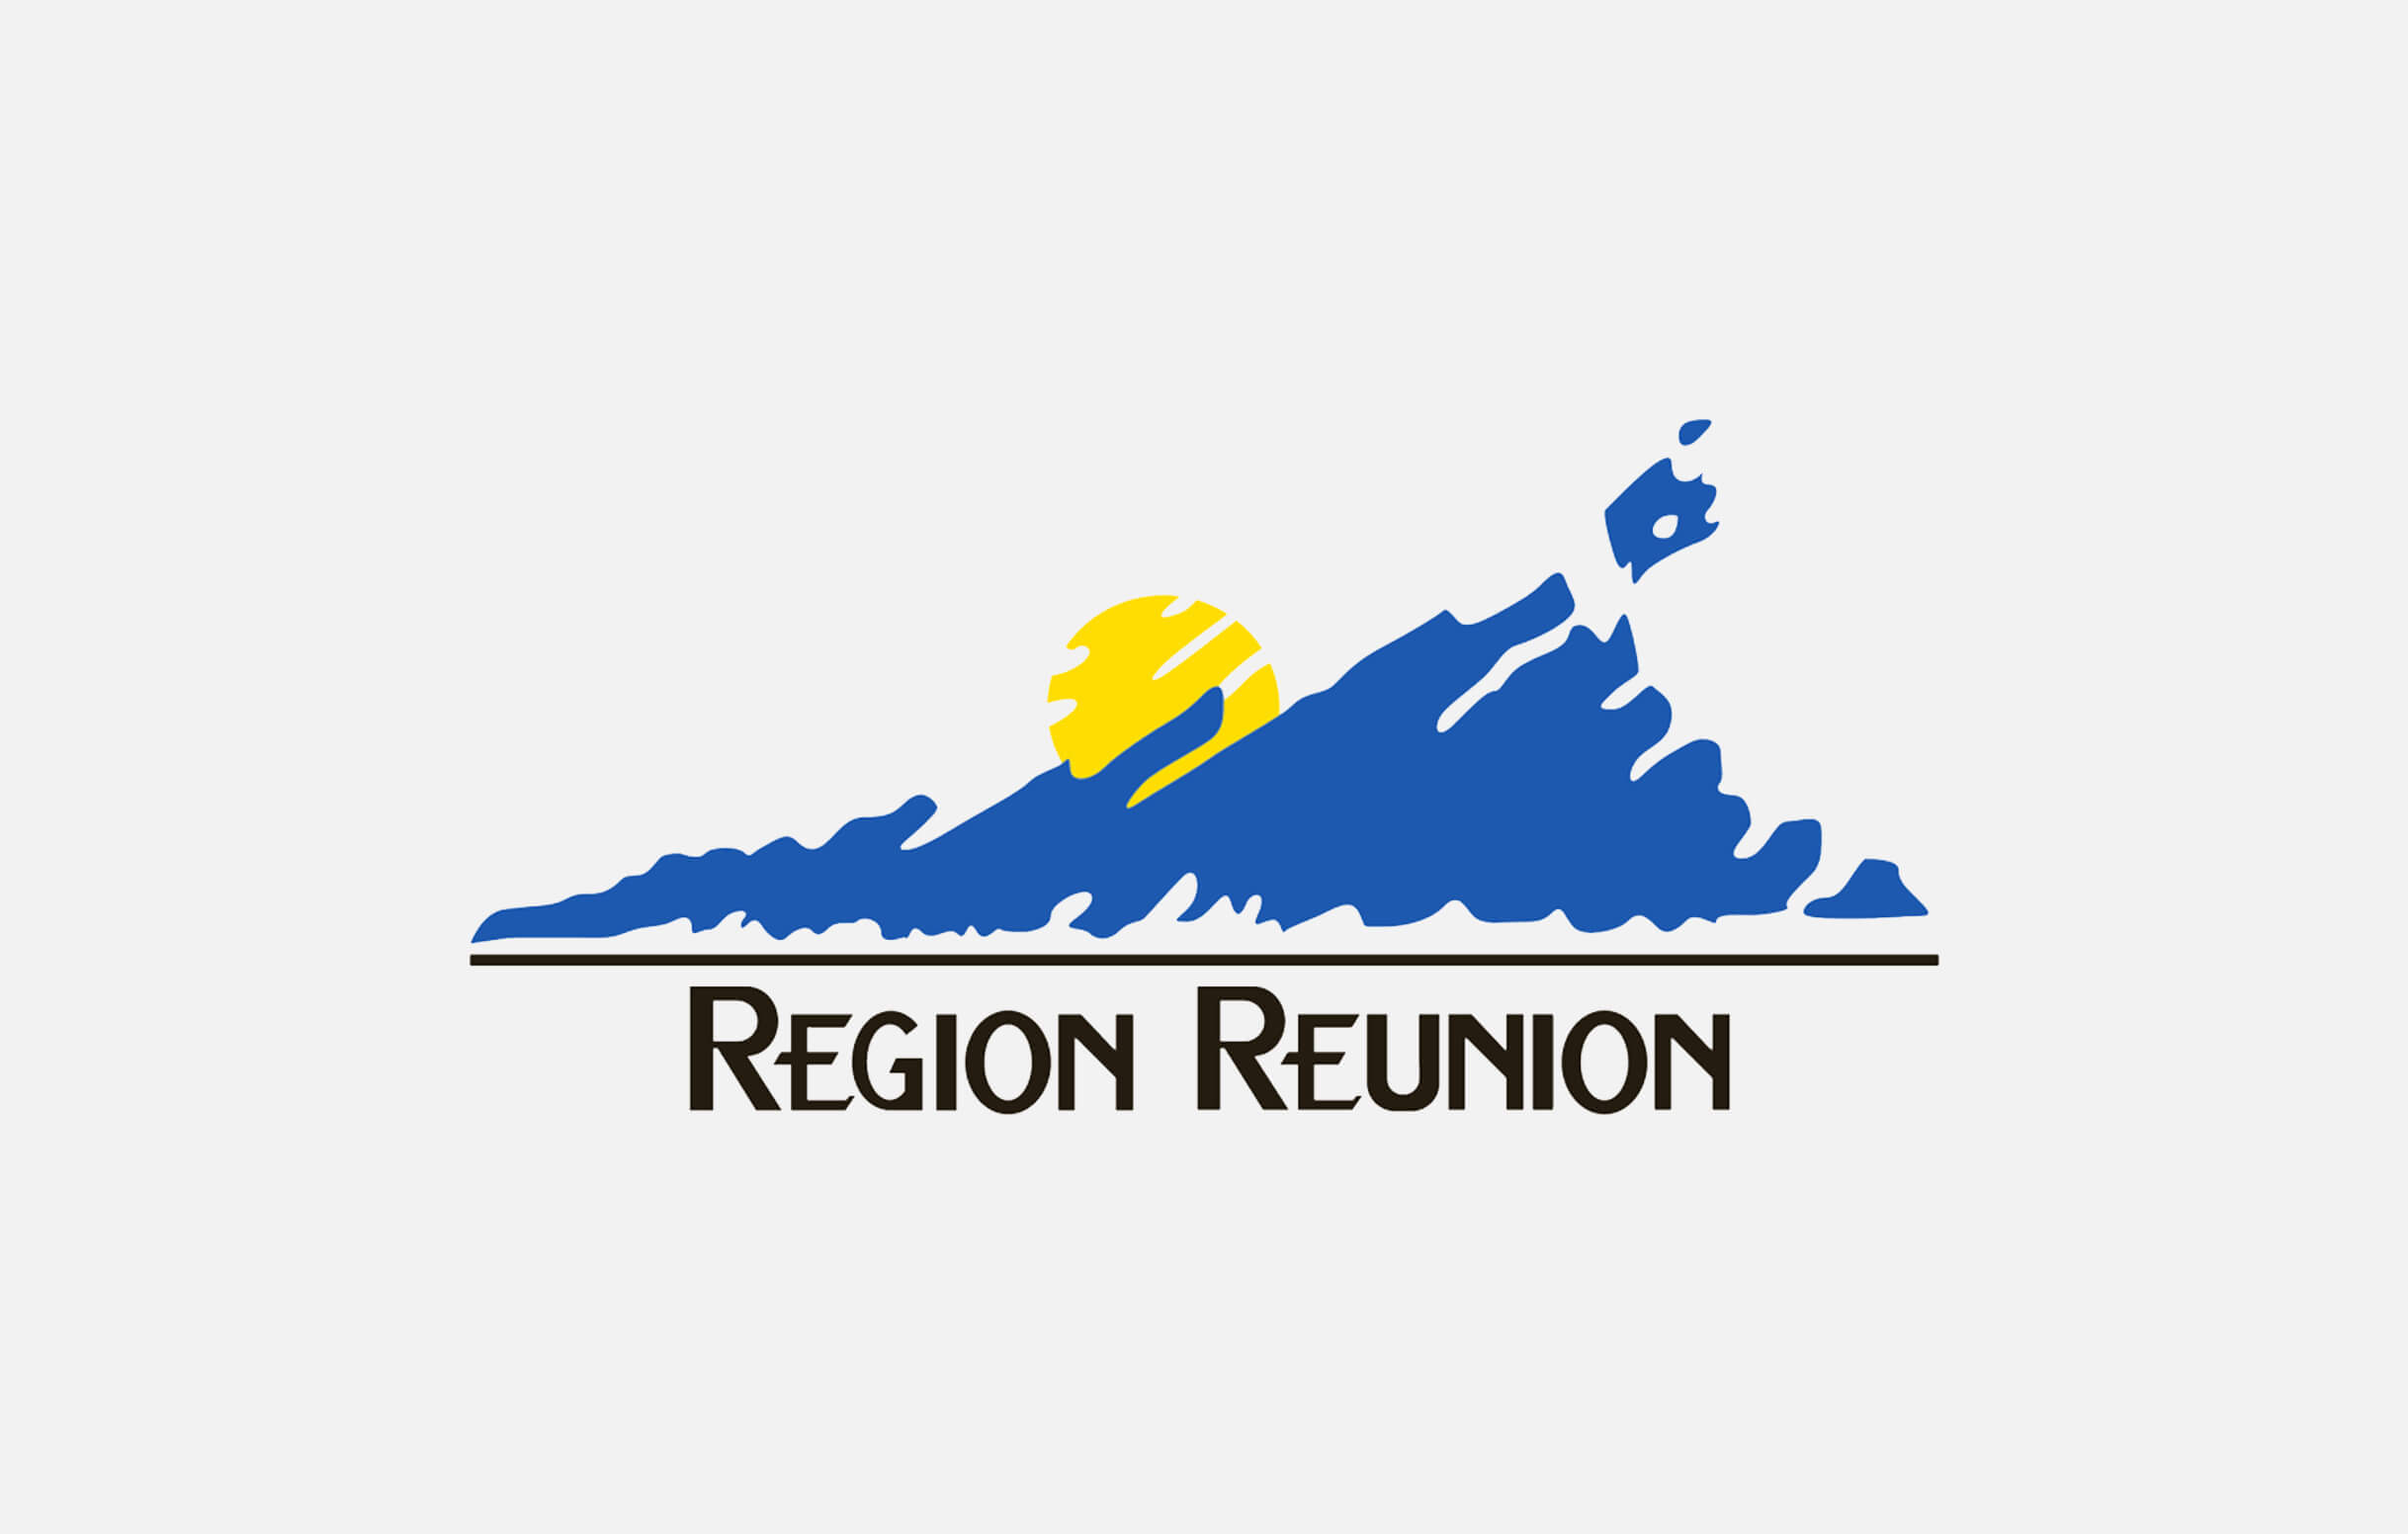 Region reunion